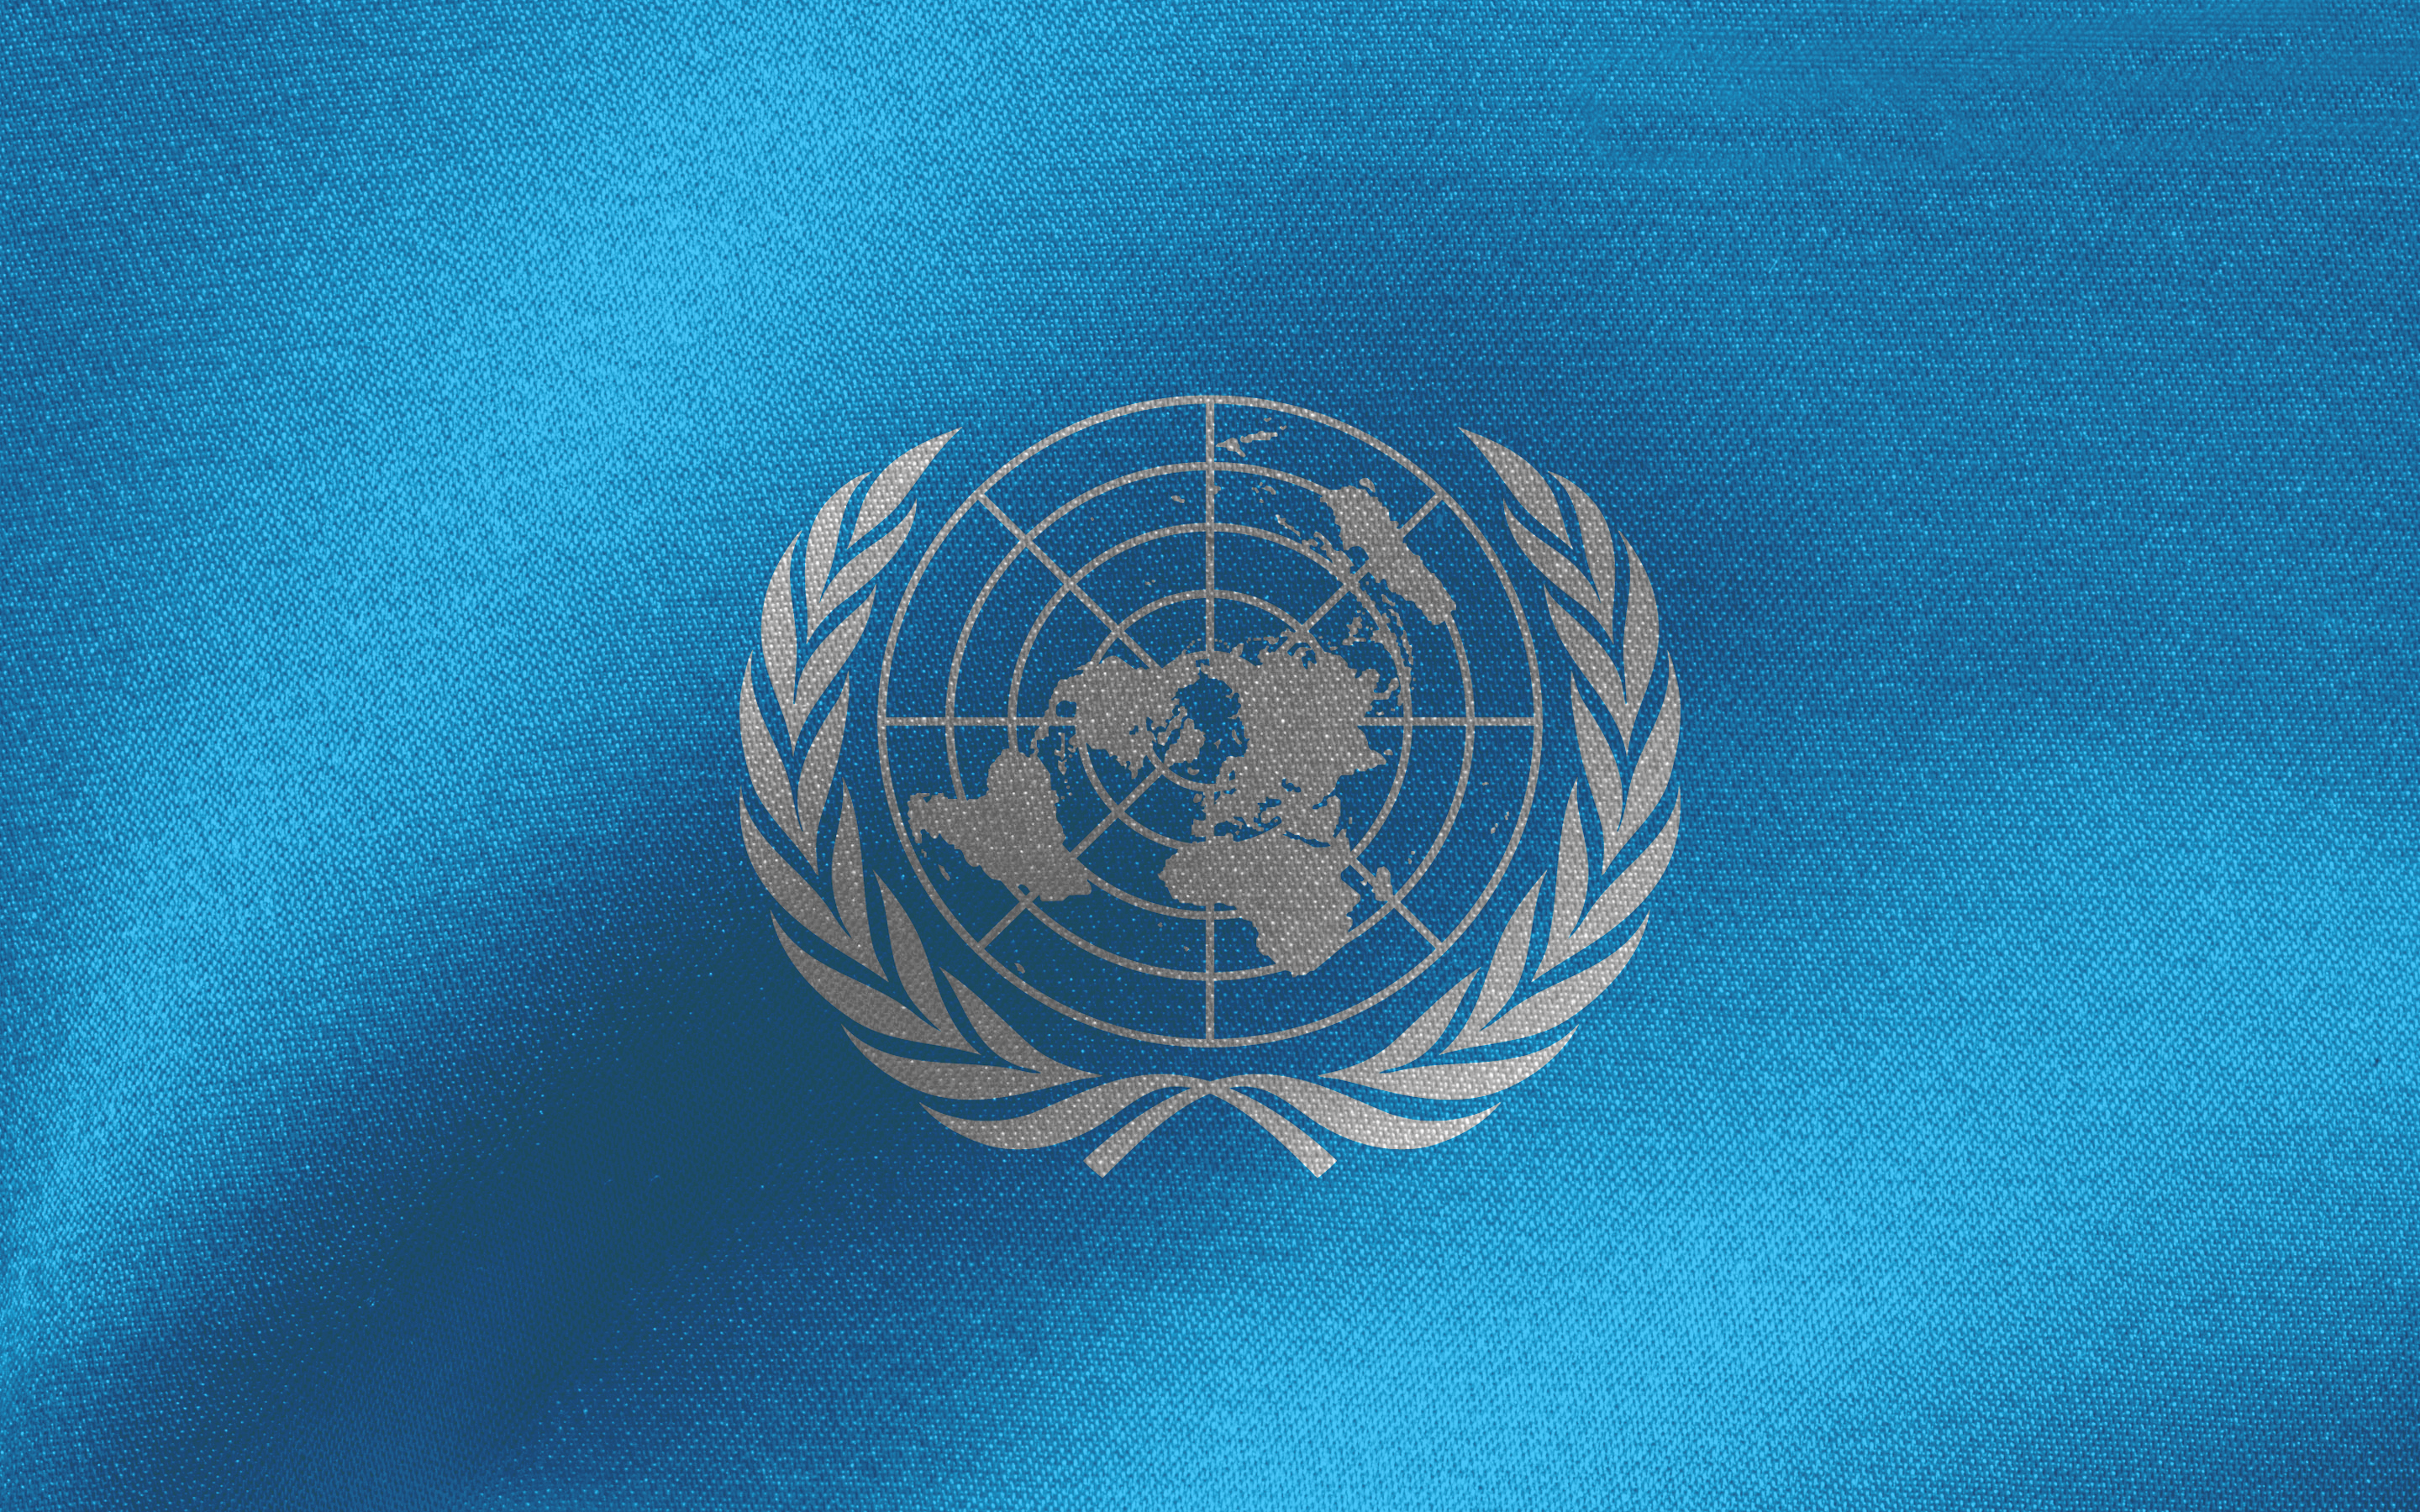 Цвета оон. Европейская экономическая комиссия ООН (ЕЭК ООН). Флаг ООН. Флаг организации Объединенных наций. Логотип ООН.